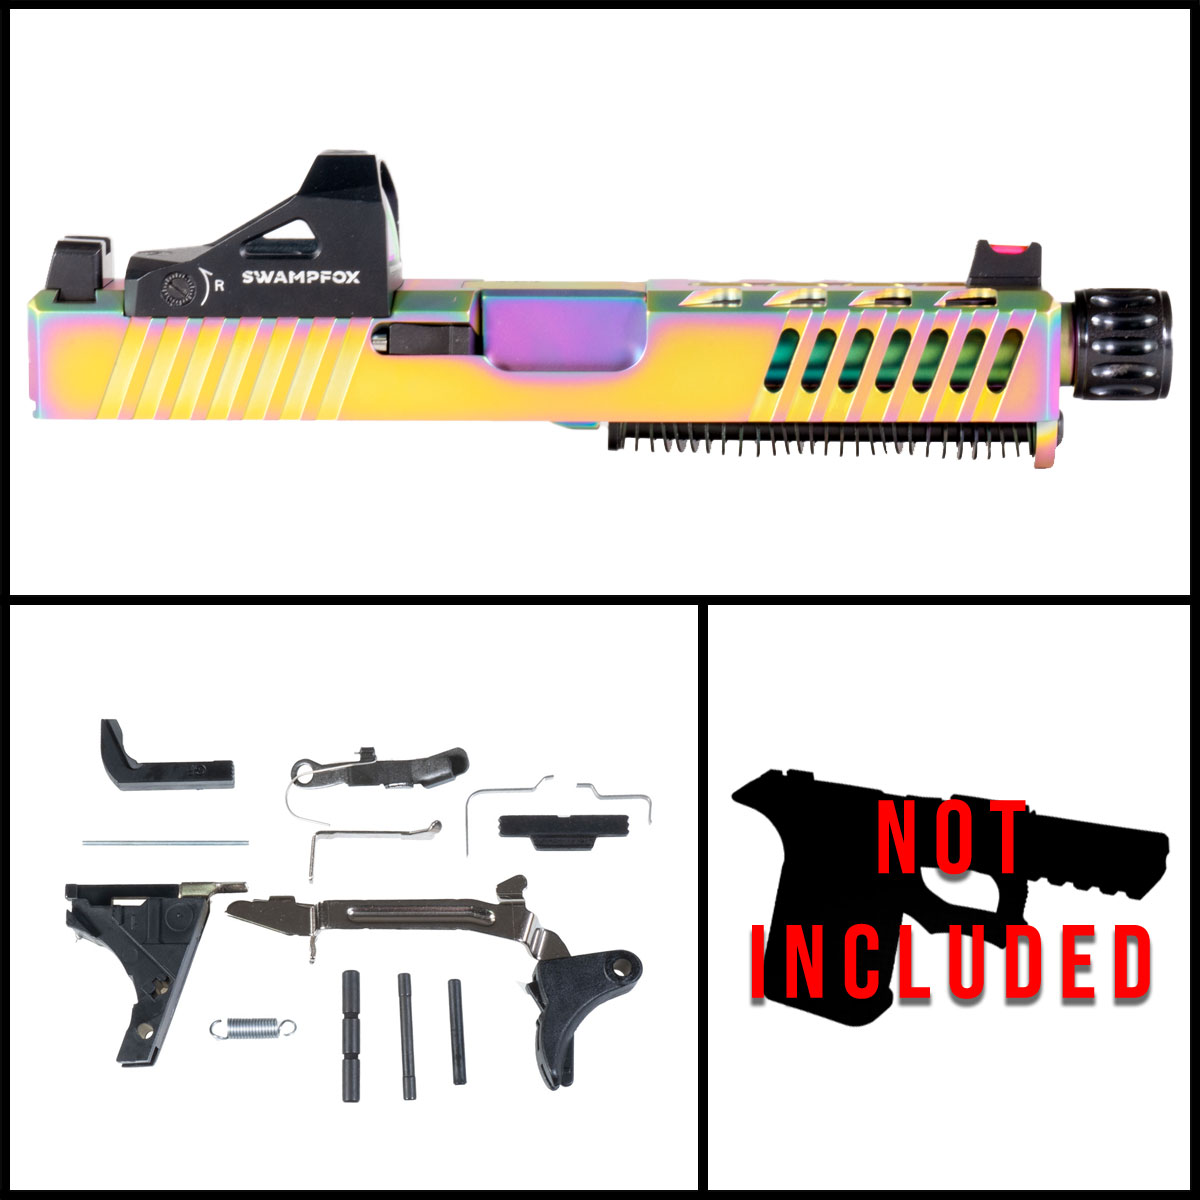 DTT 'Lumina w/ Swampfox Justice RMR' 9mm Full Pistol Build Kits (Everything Minus Frame) - Glock 19 Gen 1-3 Compatible